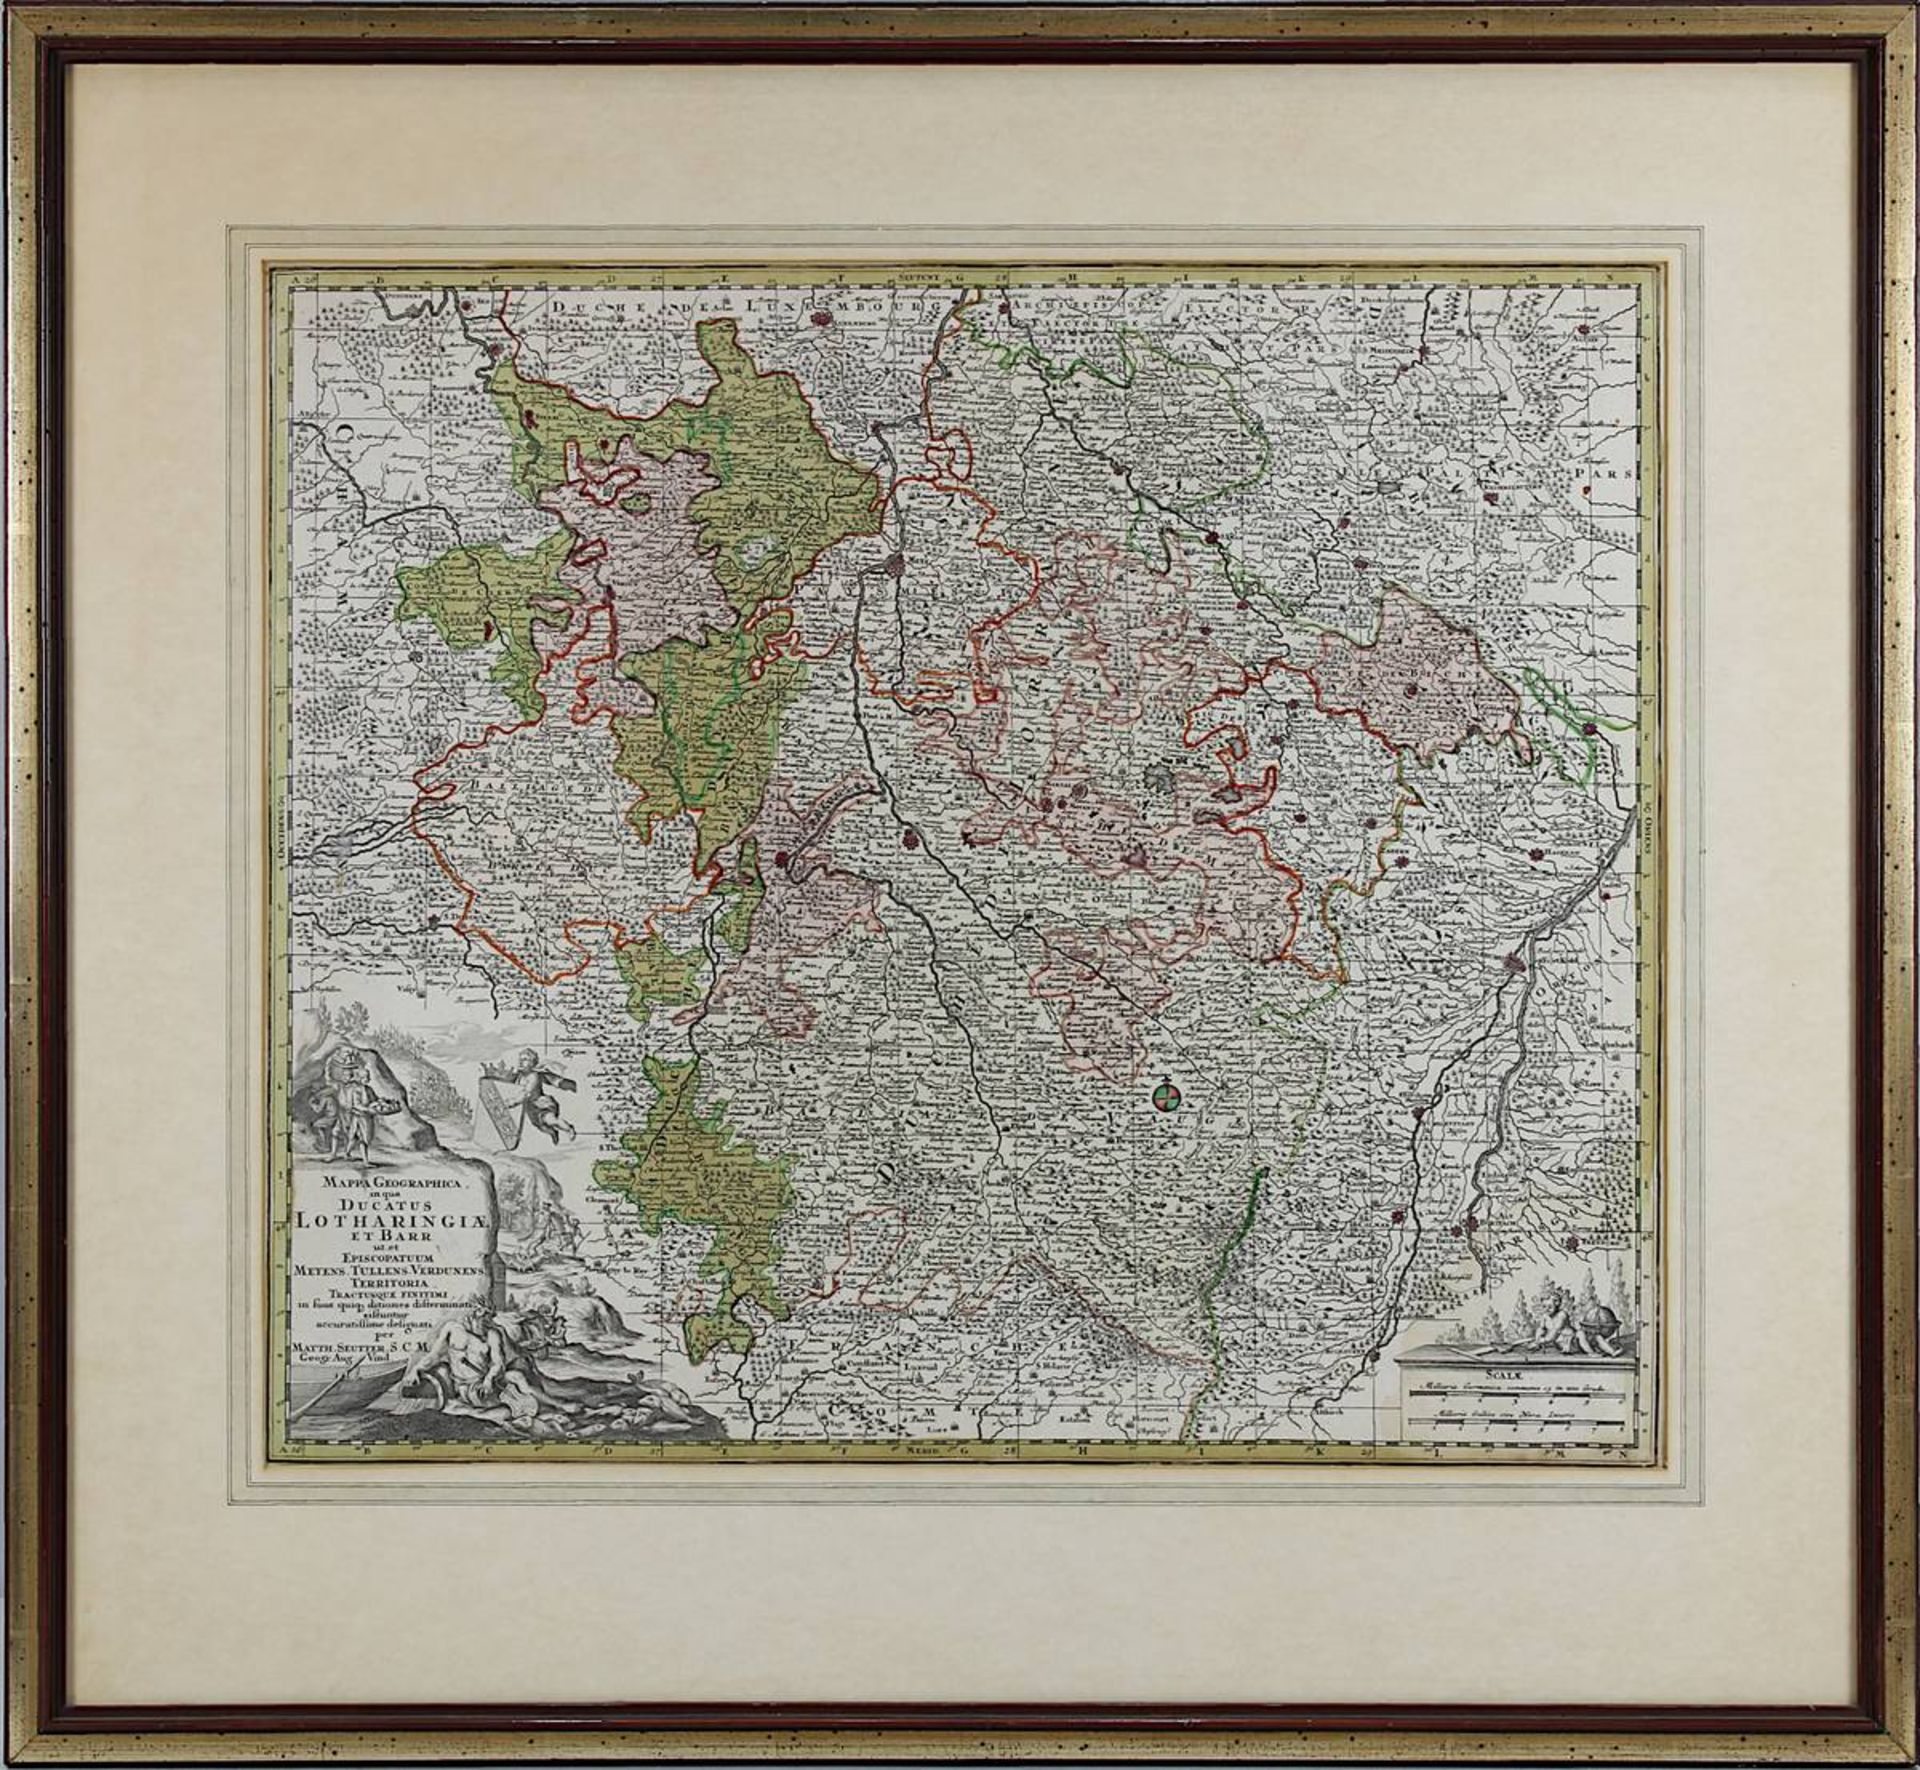 "Mappa geographica in qua Ducatus Lotharingiae et Barr...", kolorierte Kupferstichkarte von